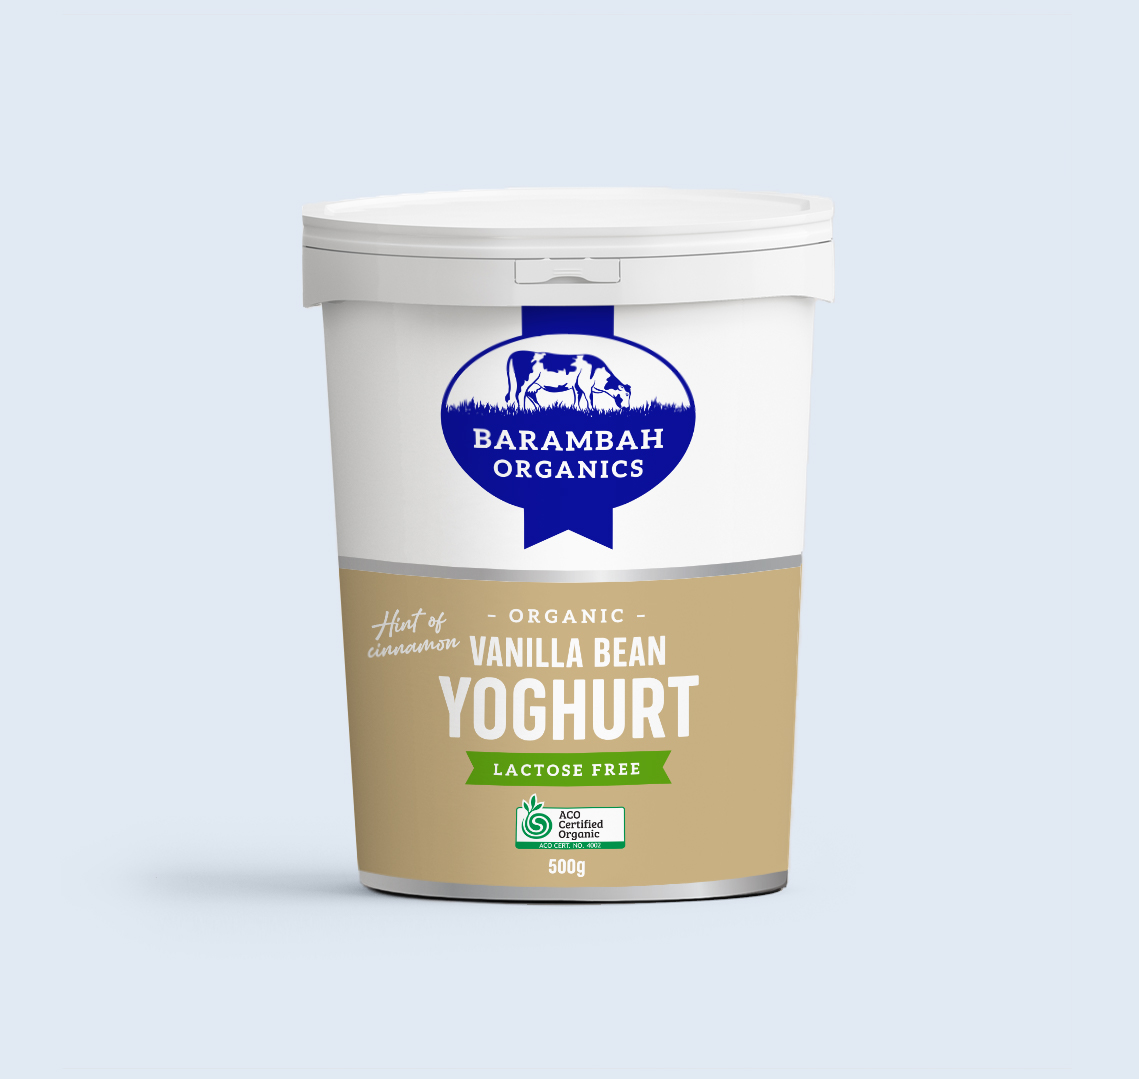 500g of Vanilla Bean Yoghurt - Organic Natural Yoghurt - Barambah Organics